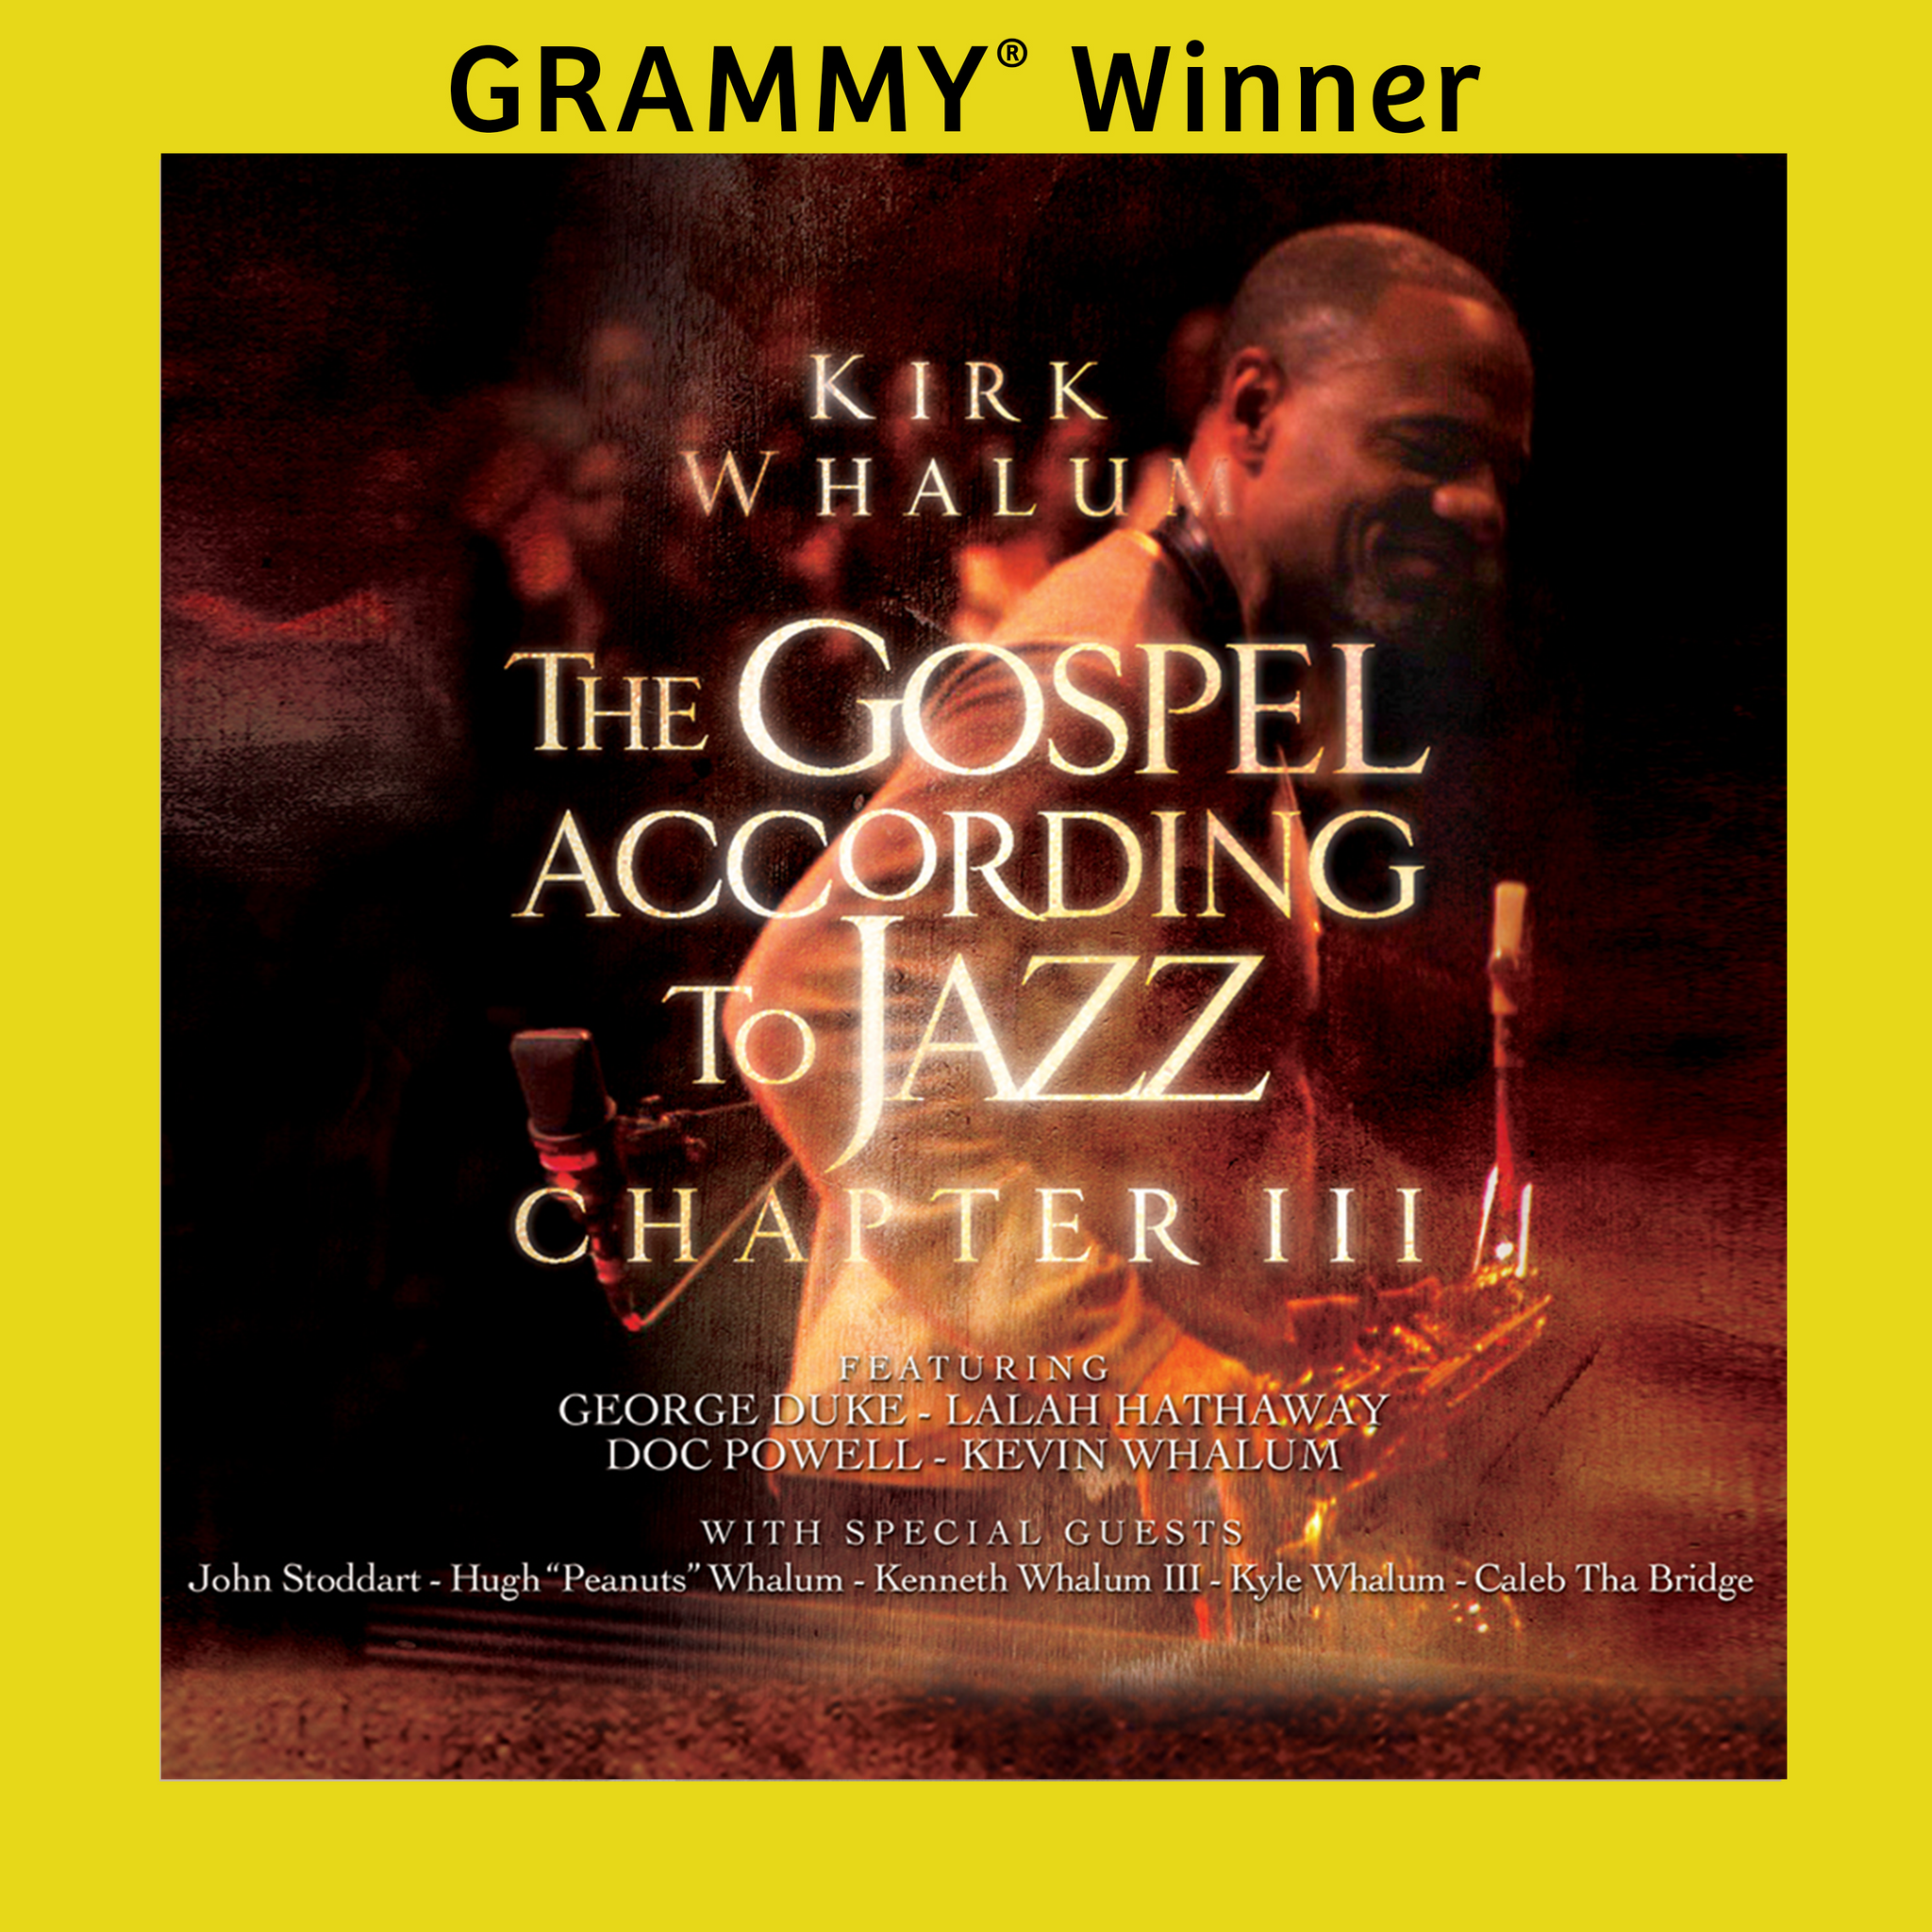 Kirk Whalum - The Gospel According to Jazz – Chapter III